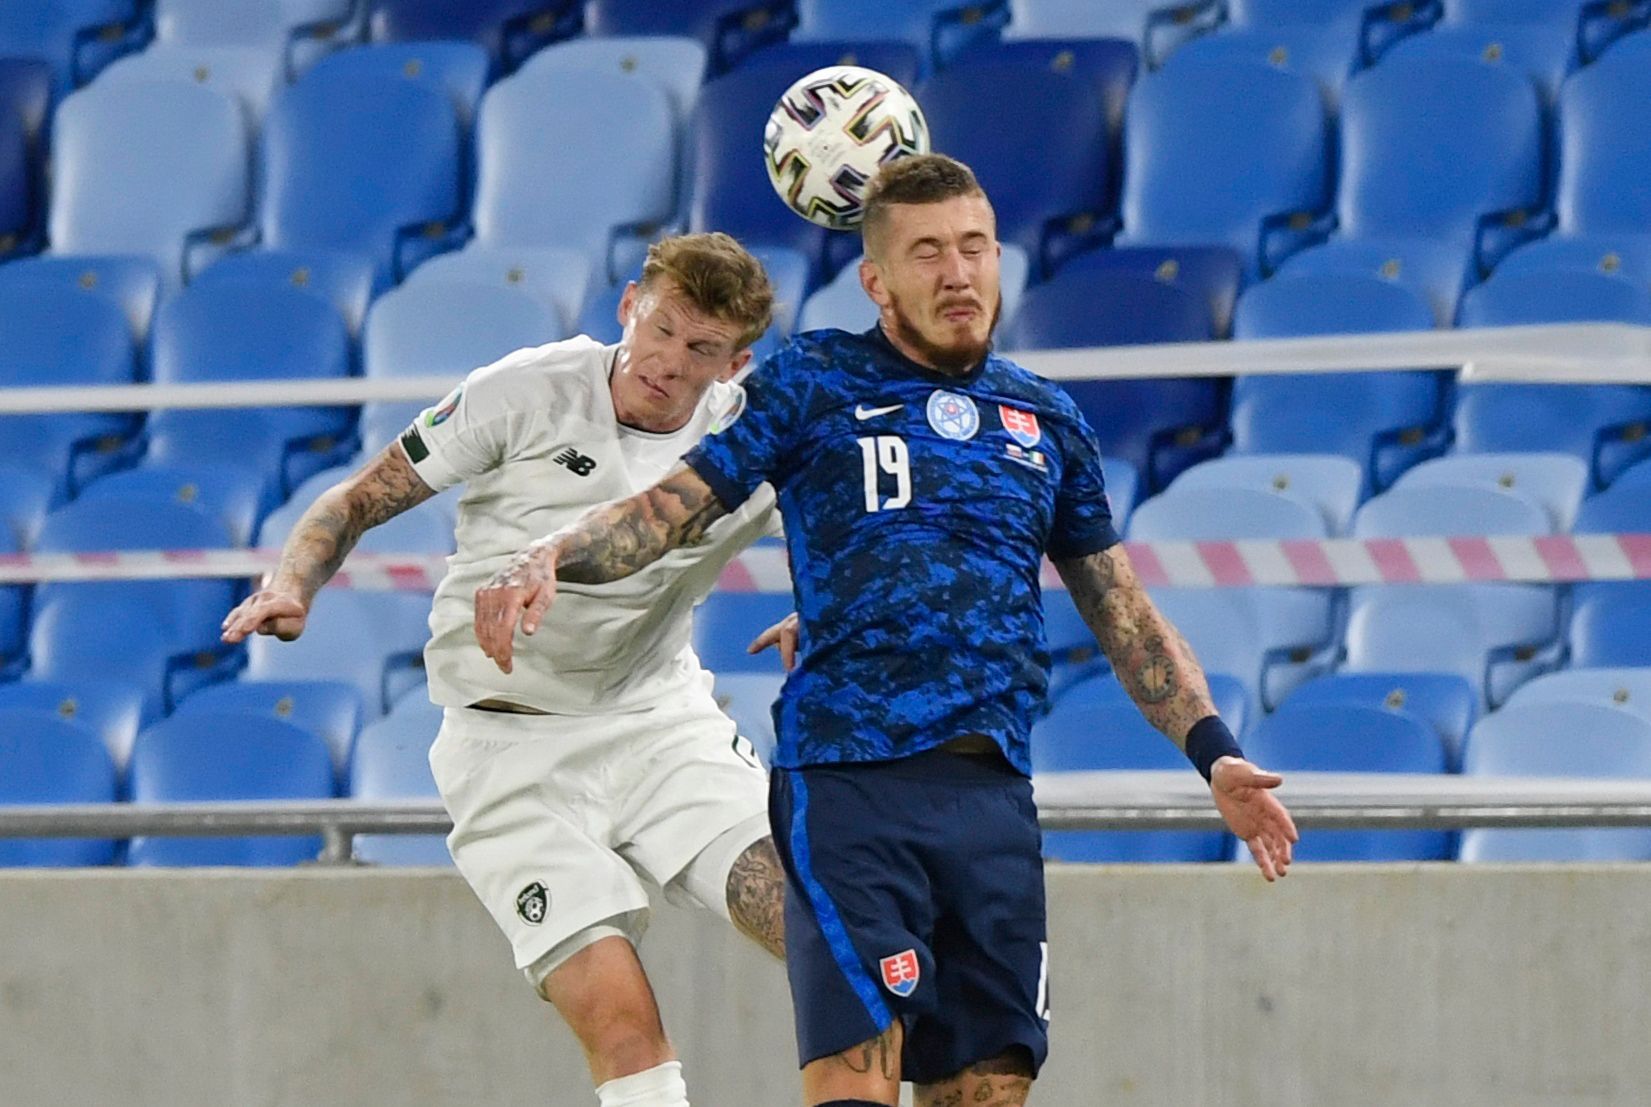 fotbal, kvalifikace Euro 2020 play off - Slovensko - Irsko Juraj Kucka in action with Republic of Ireland’s James McClean